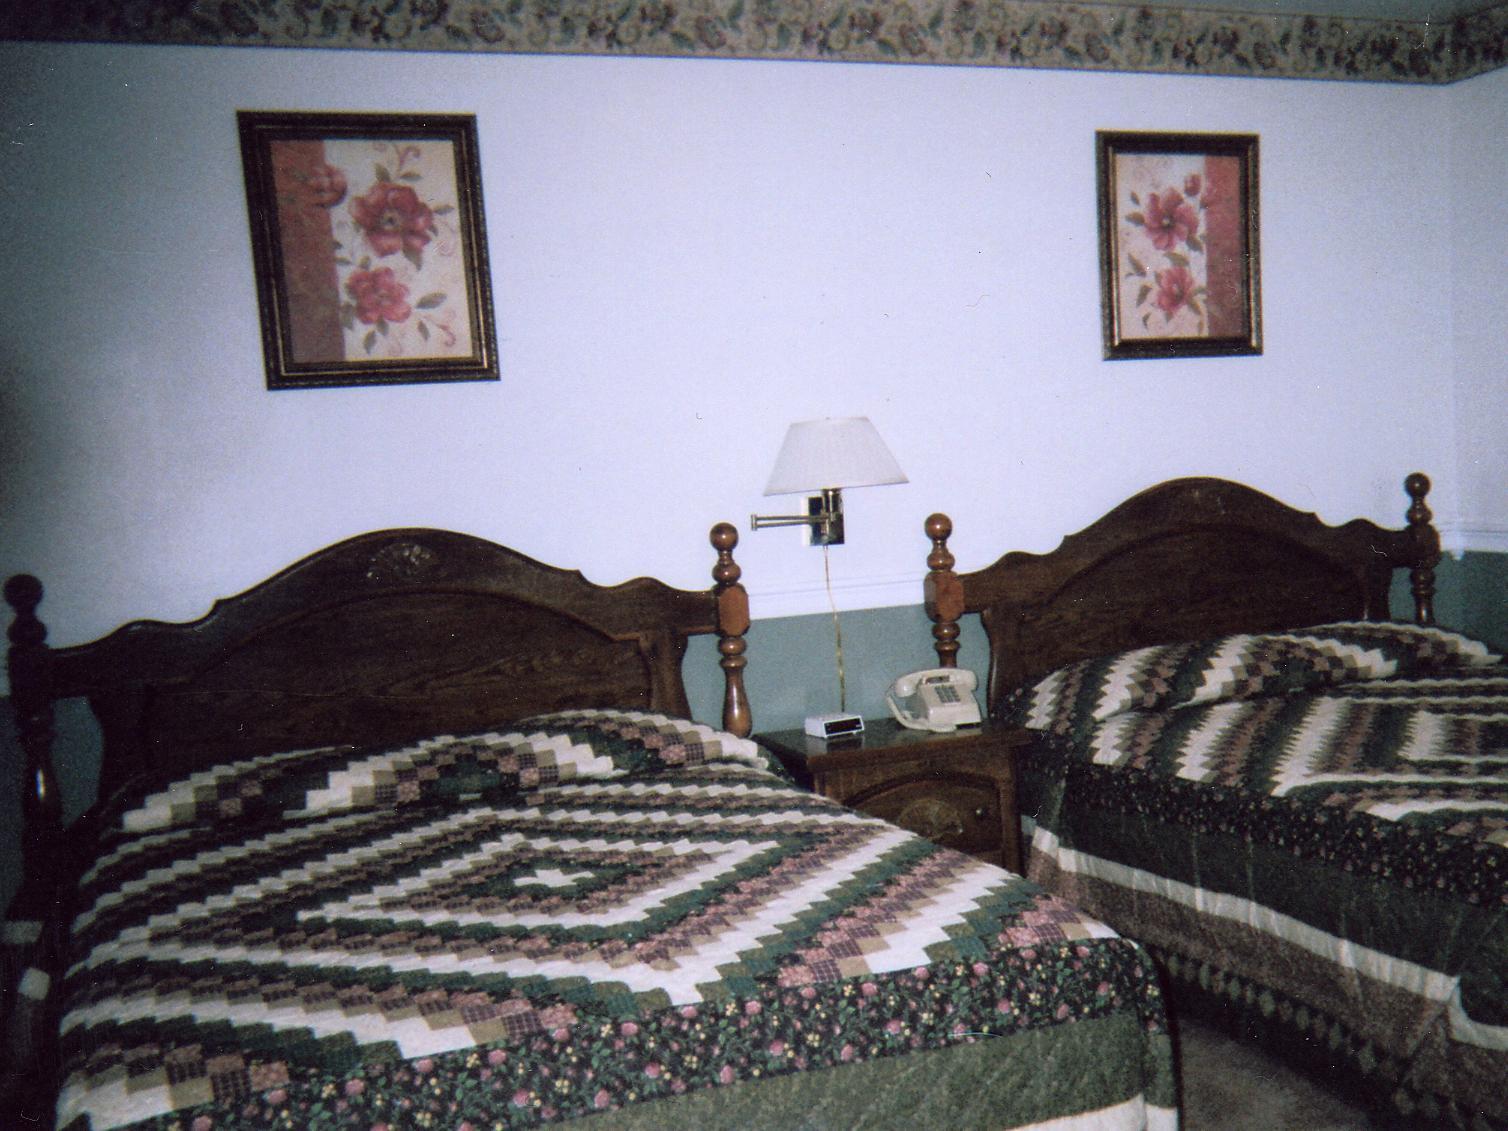 Judys Motel เบดฟอร์ด ภายนอก รูปภาพ